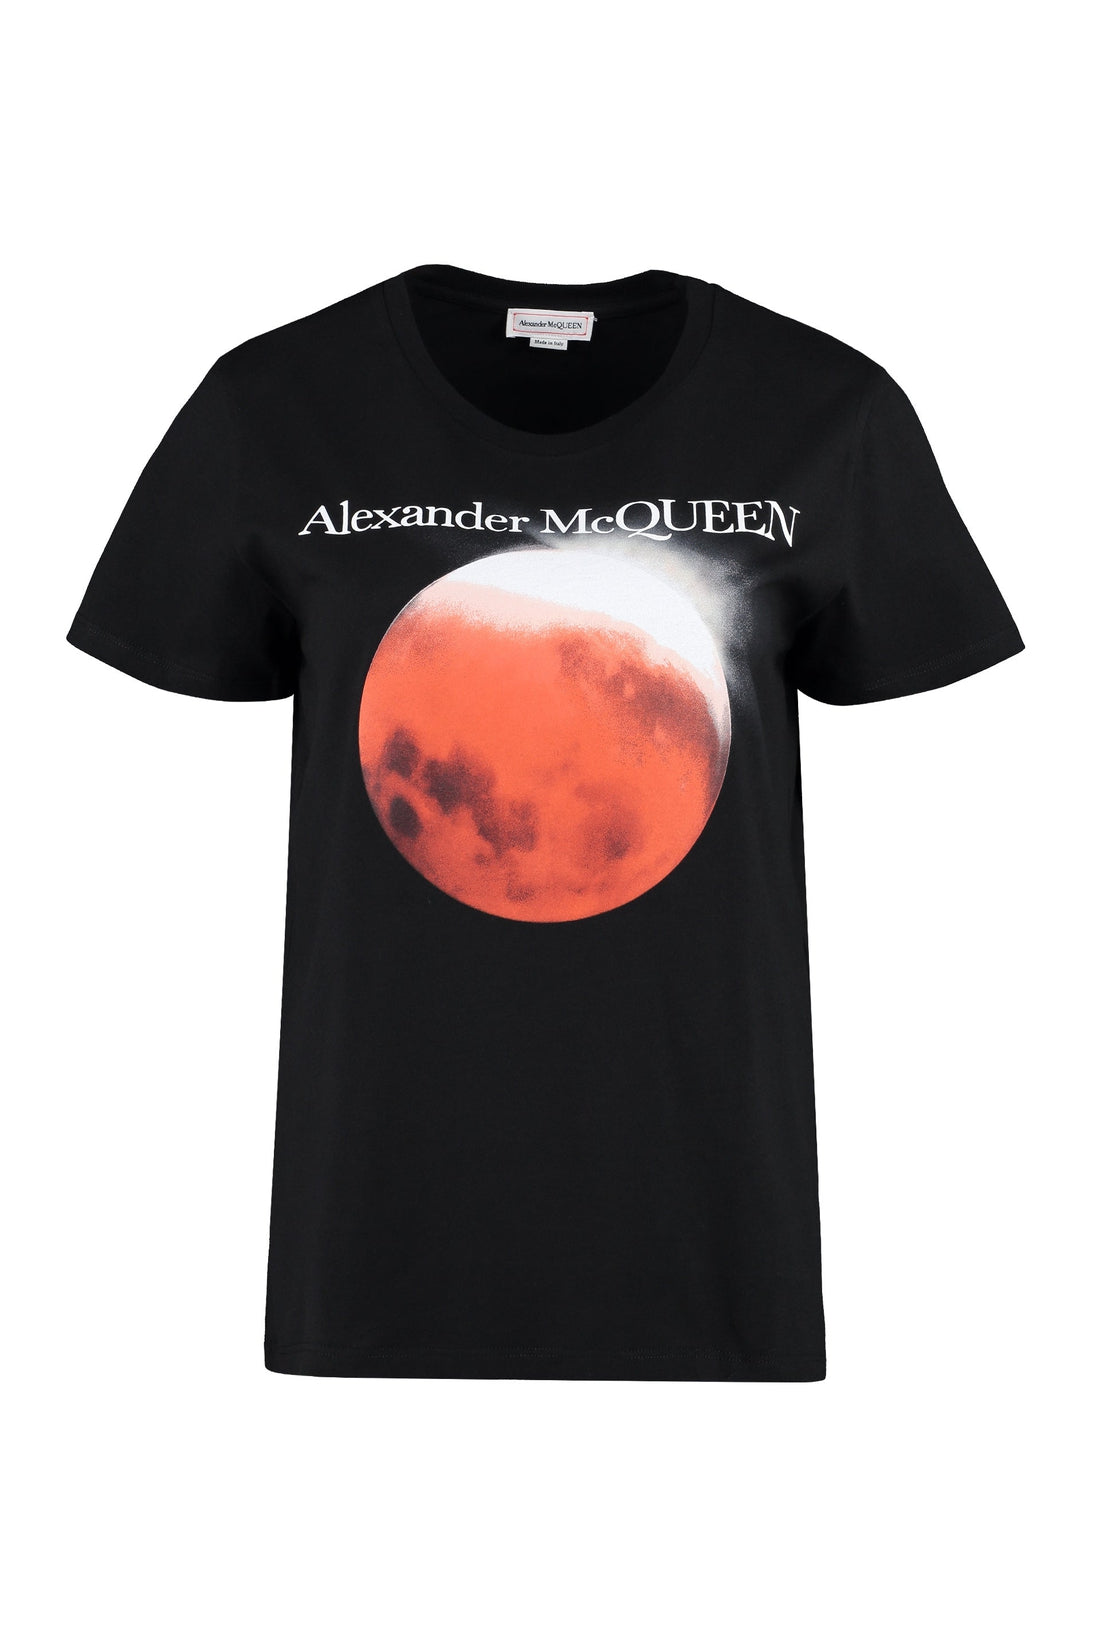 Alexander McQueen-OUTLET-SALE-Printed t-shirt-ARCHIVIST